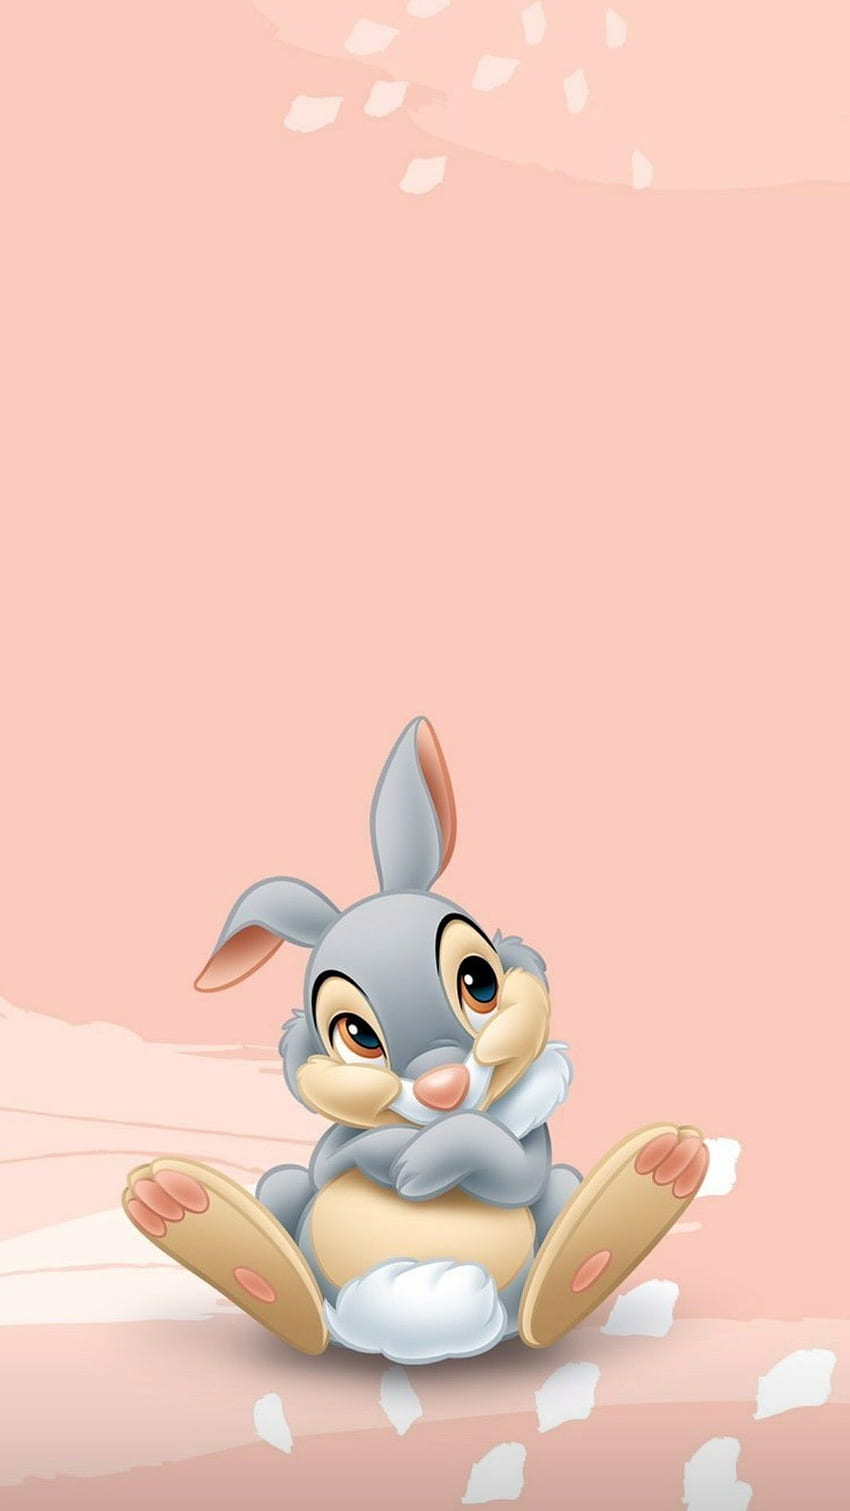 Thumper (Bambi) en 2020. Disney, muñecos de papel de Disney, iphone neon fondo de pantalla del teléfono